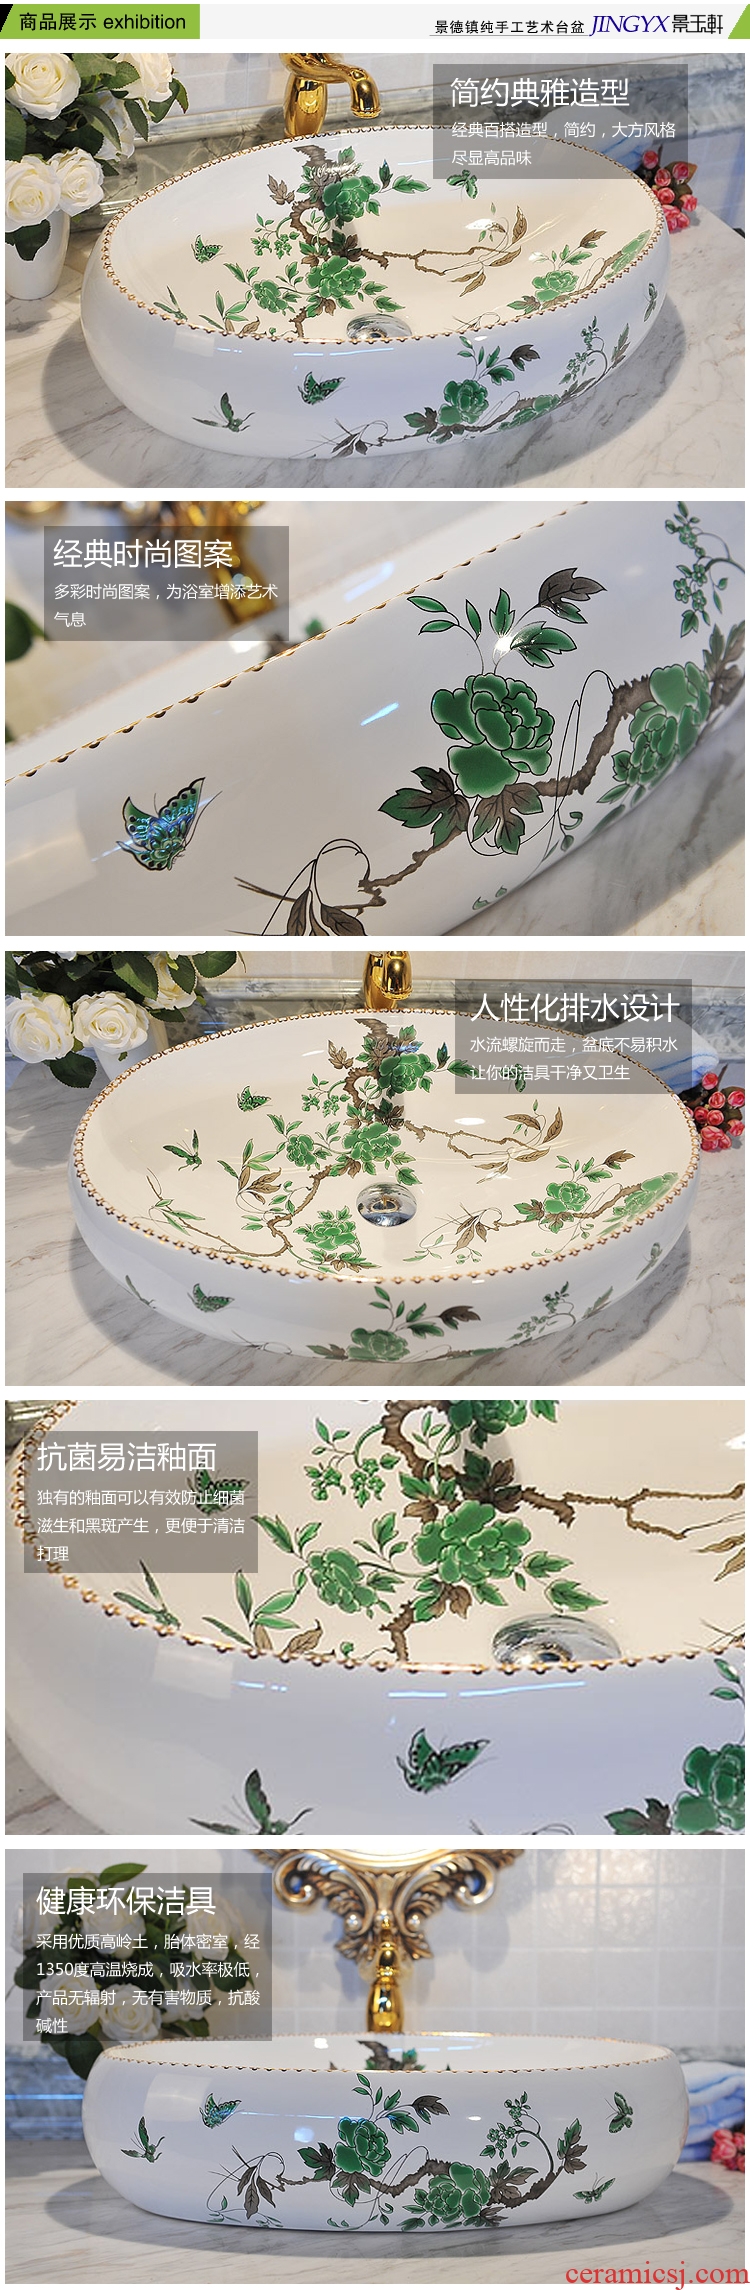 Jingdezhen ceramic art basin high white sapphire oval many sanitary ware stage basin sinks